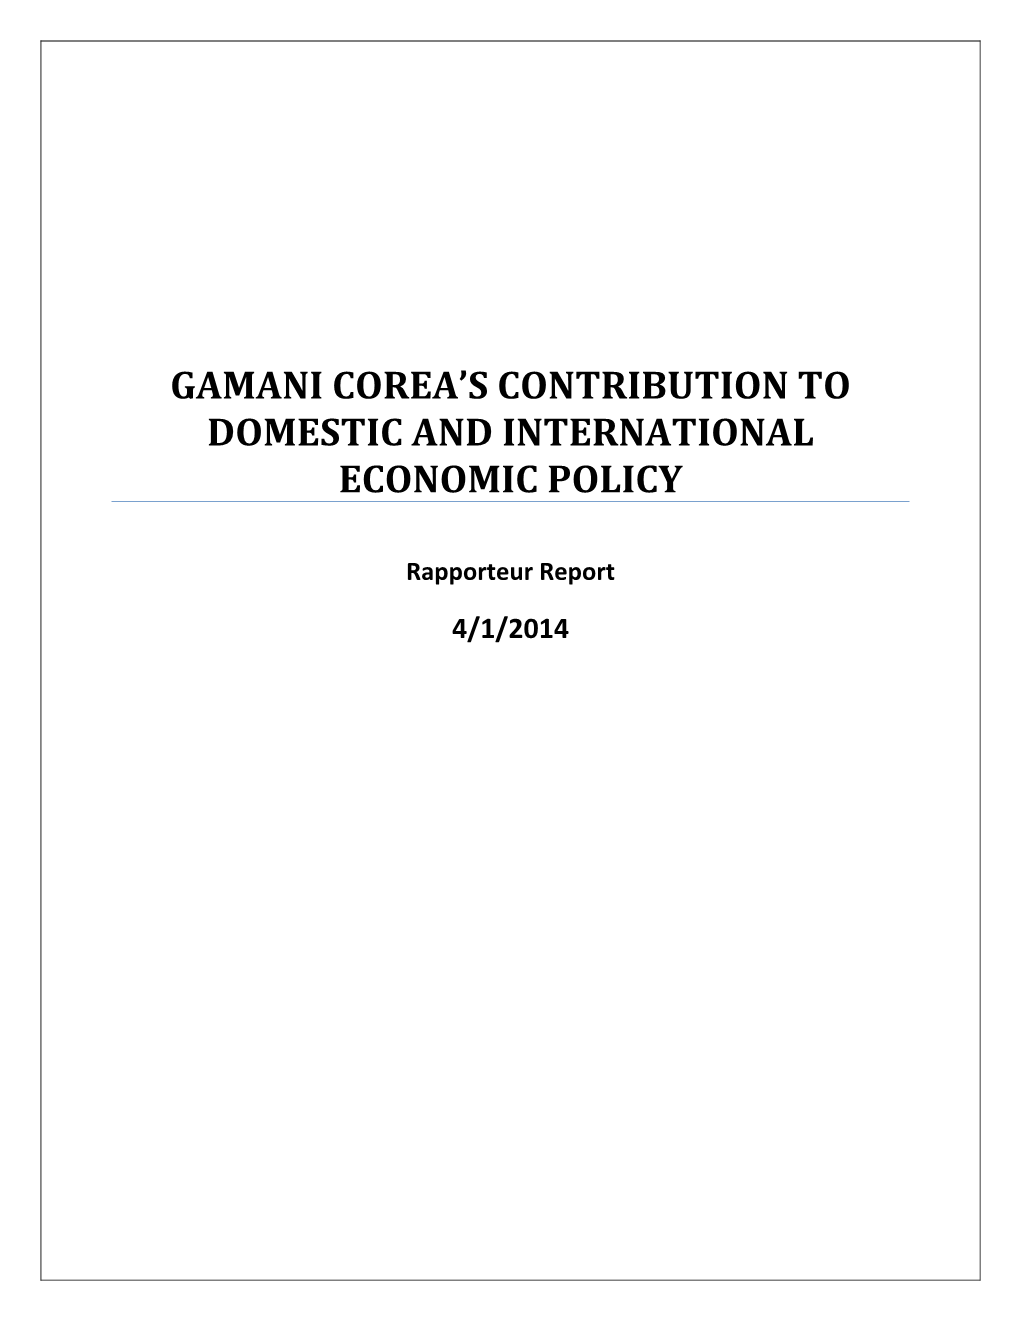 Gamani Corea's Contribution to Domestic and International Economic Policy